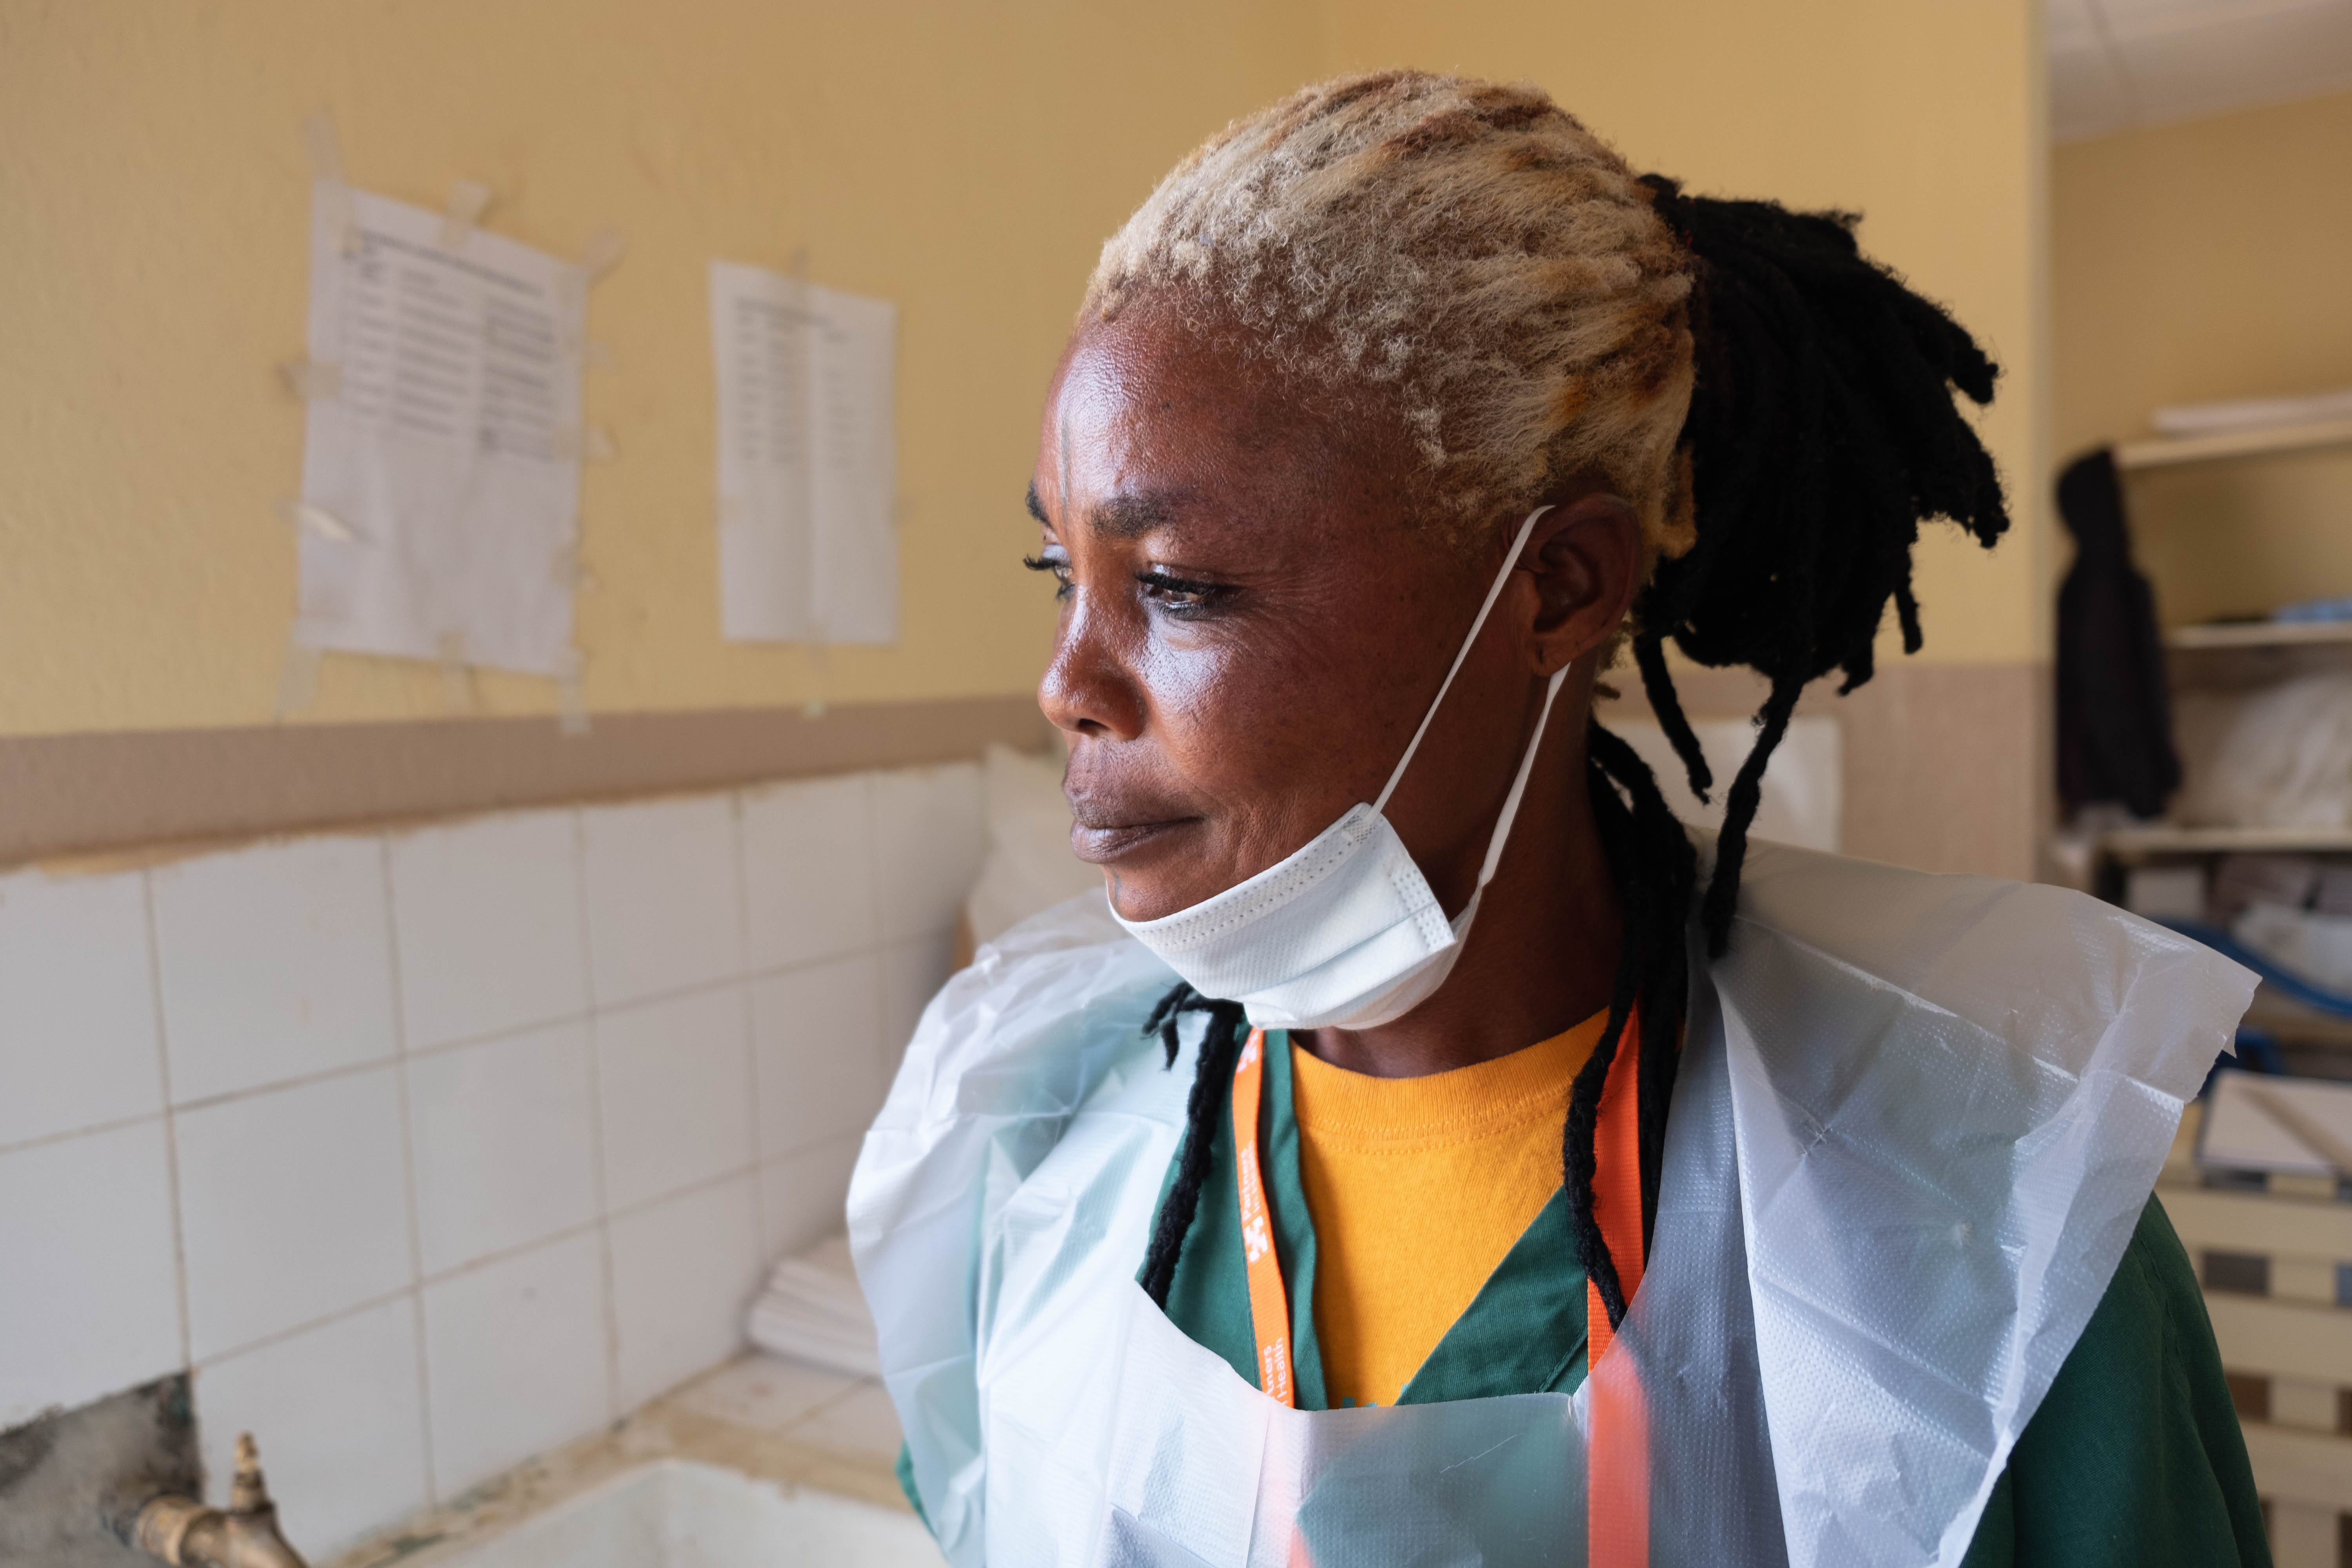 Ebola survivor Sierra Leone